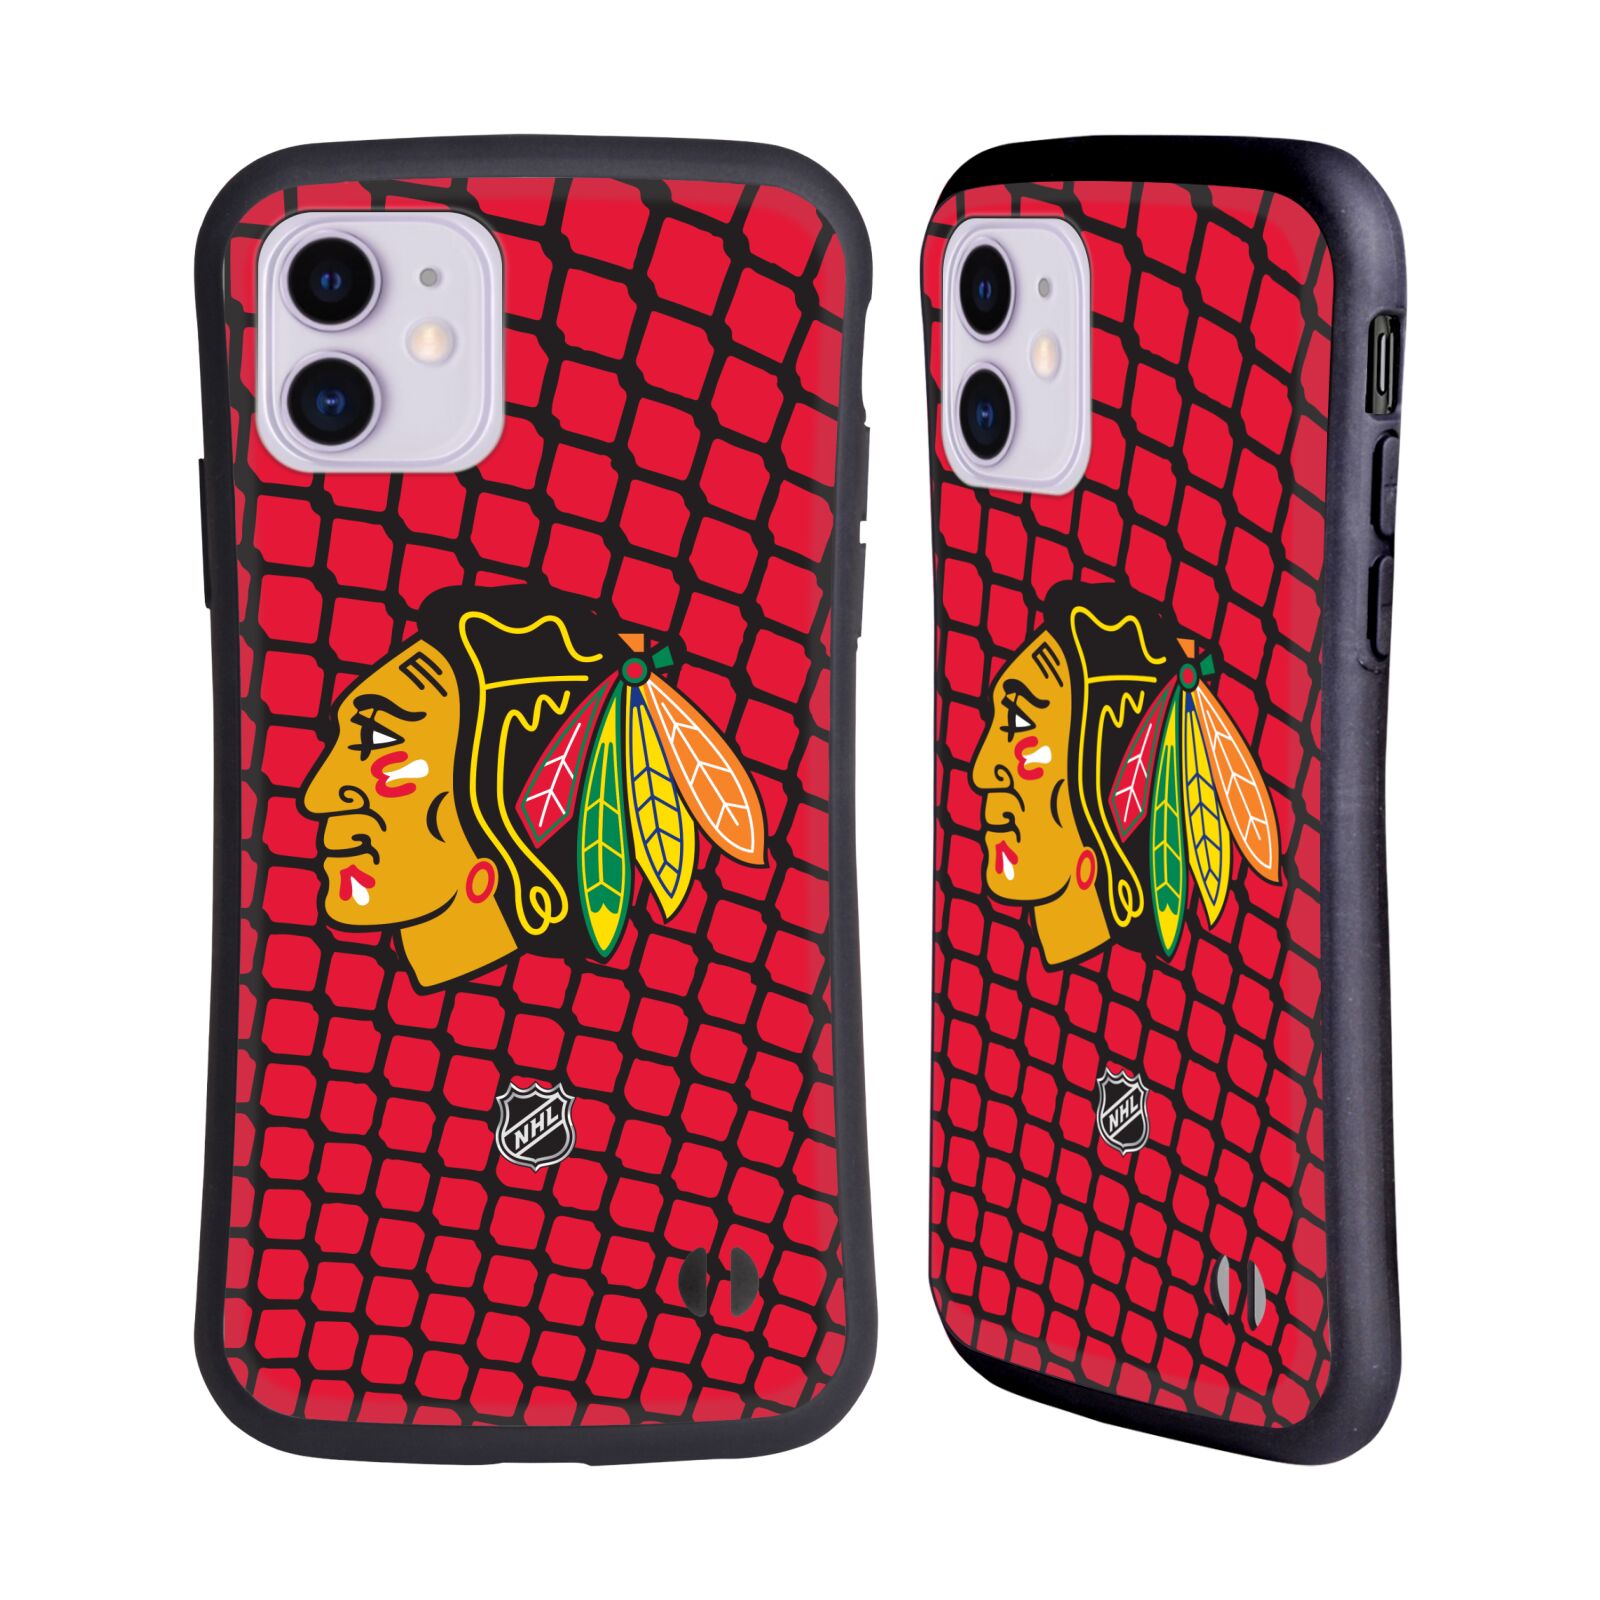 Obal na mobil Apple iPhone 11 - HEAD CASE - NHL - Chicago Blackhawks znak v brance